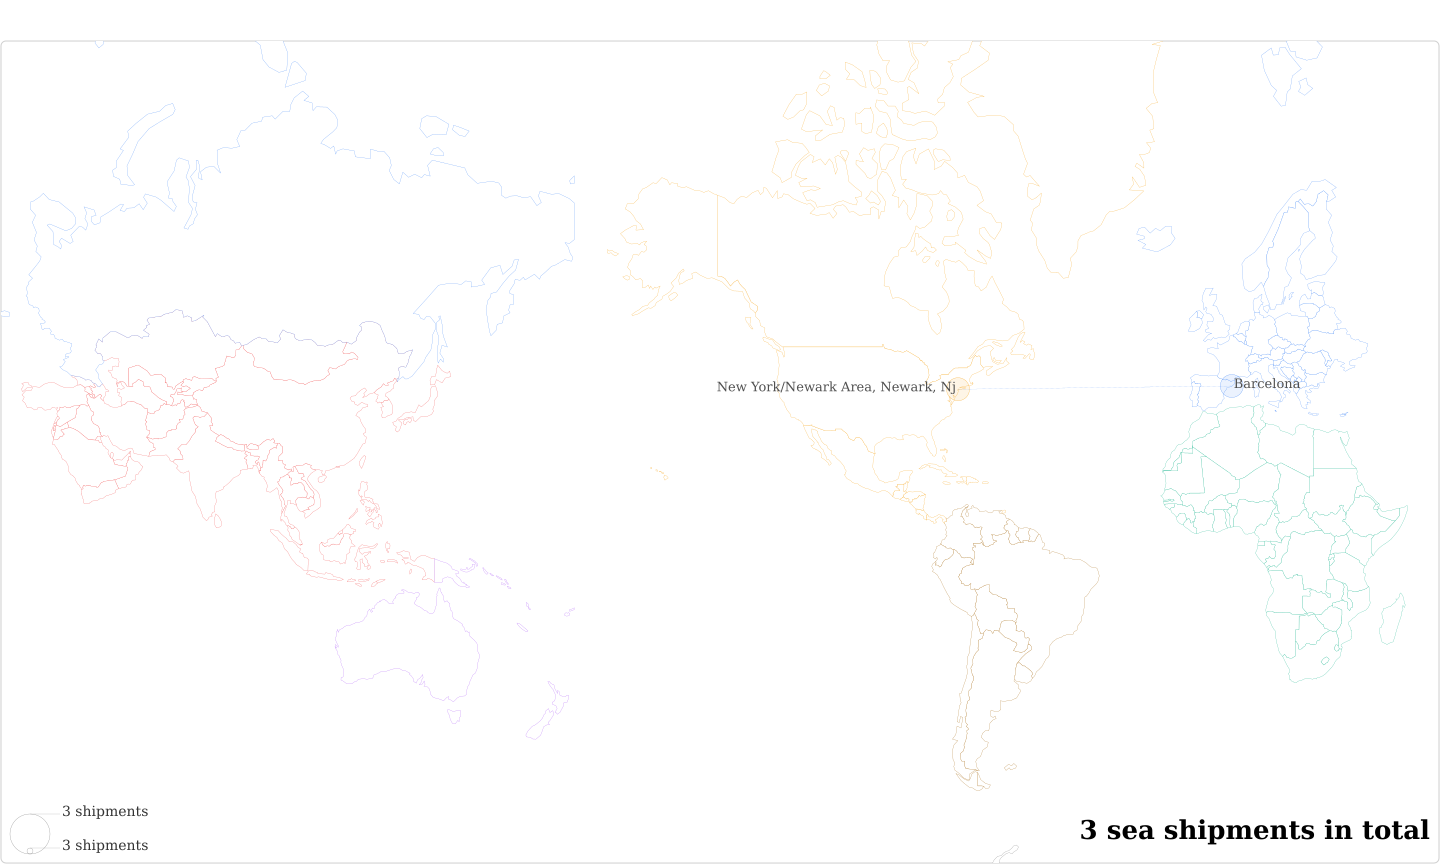 Societe Faconage Artisanat's Imports Per Country Map